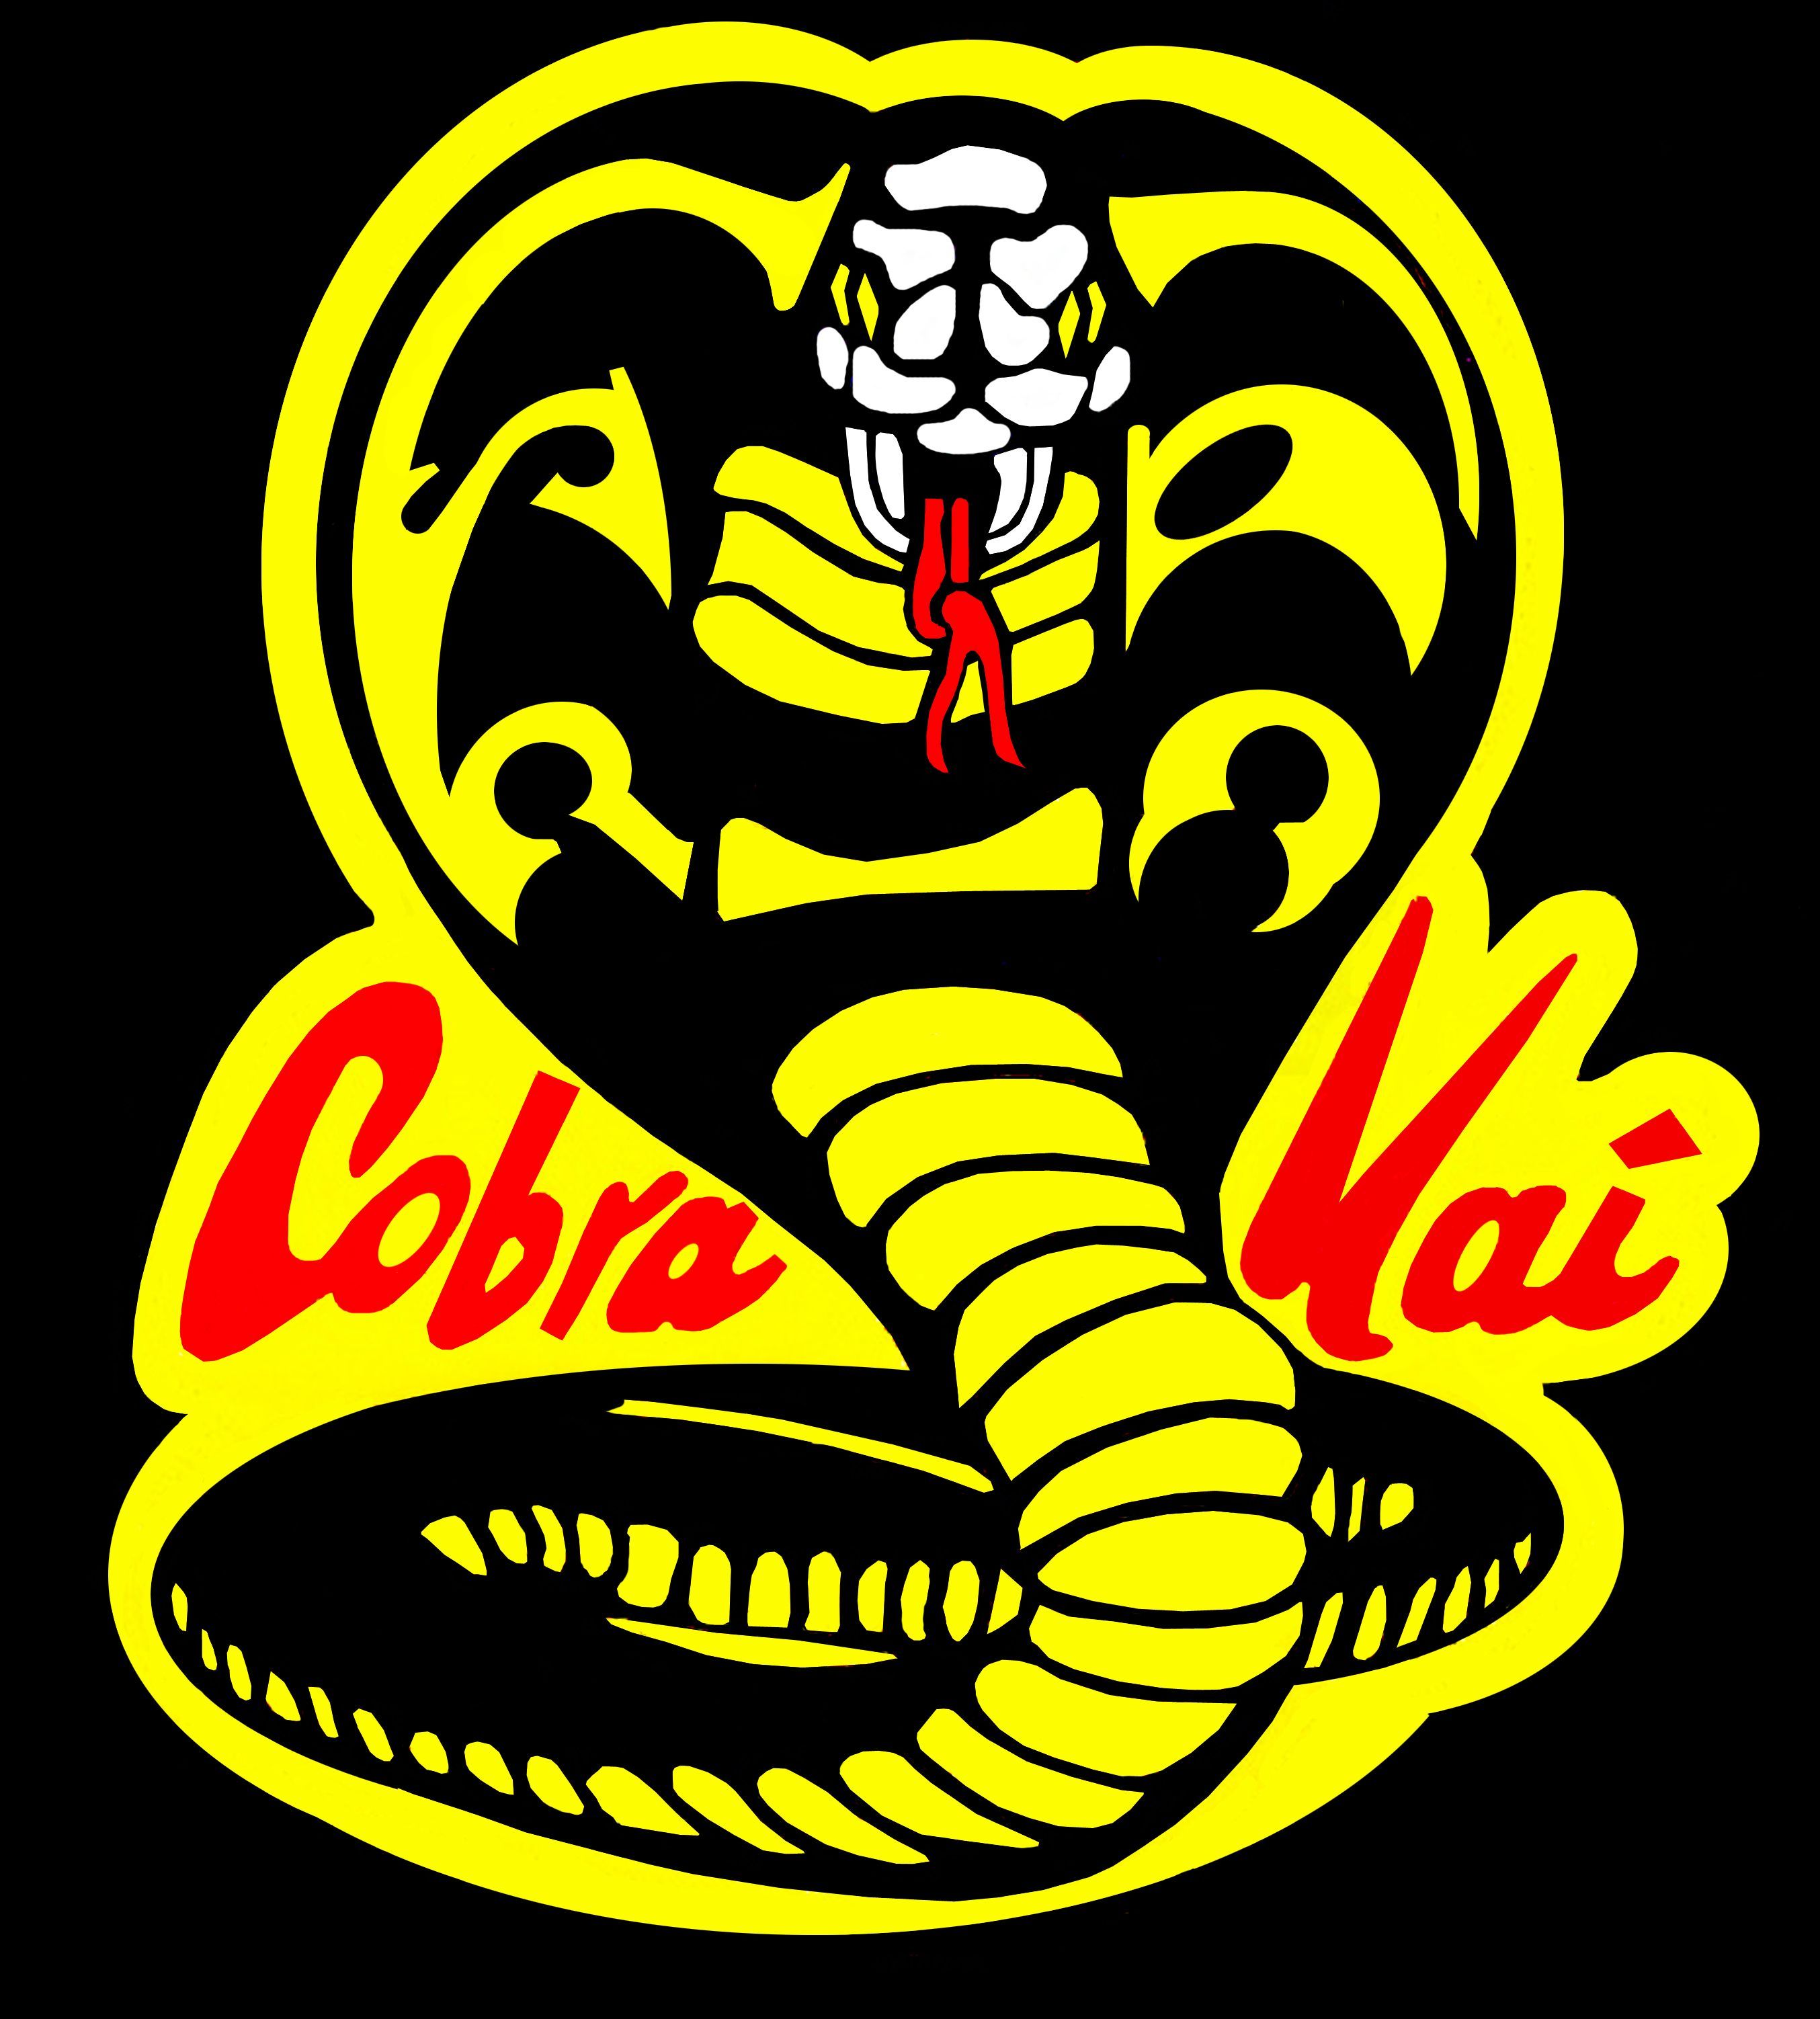 Cobra kai. Karate kid, Karate kid cobra kai, Best martial arts